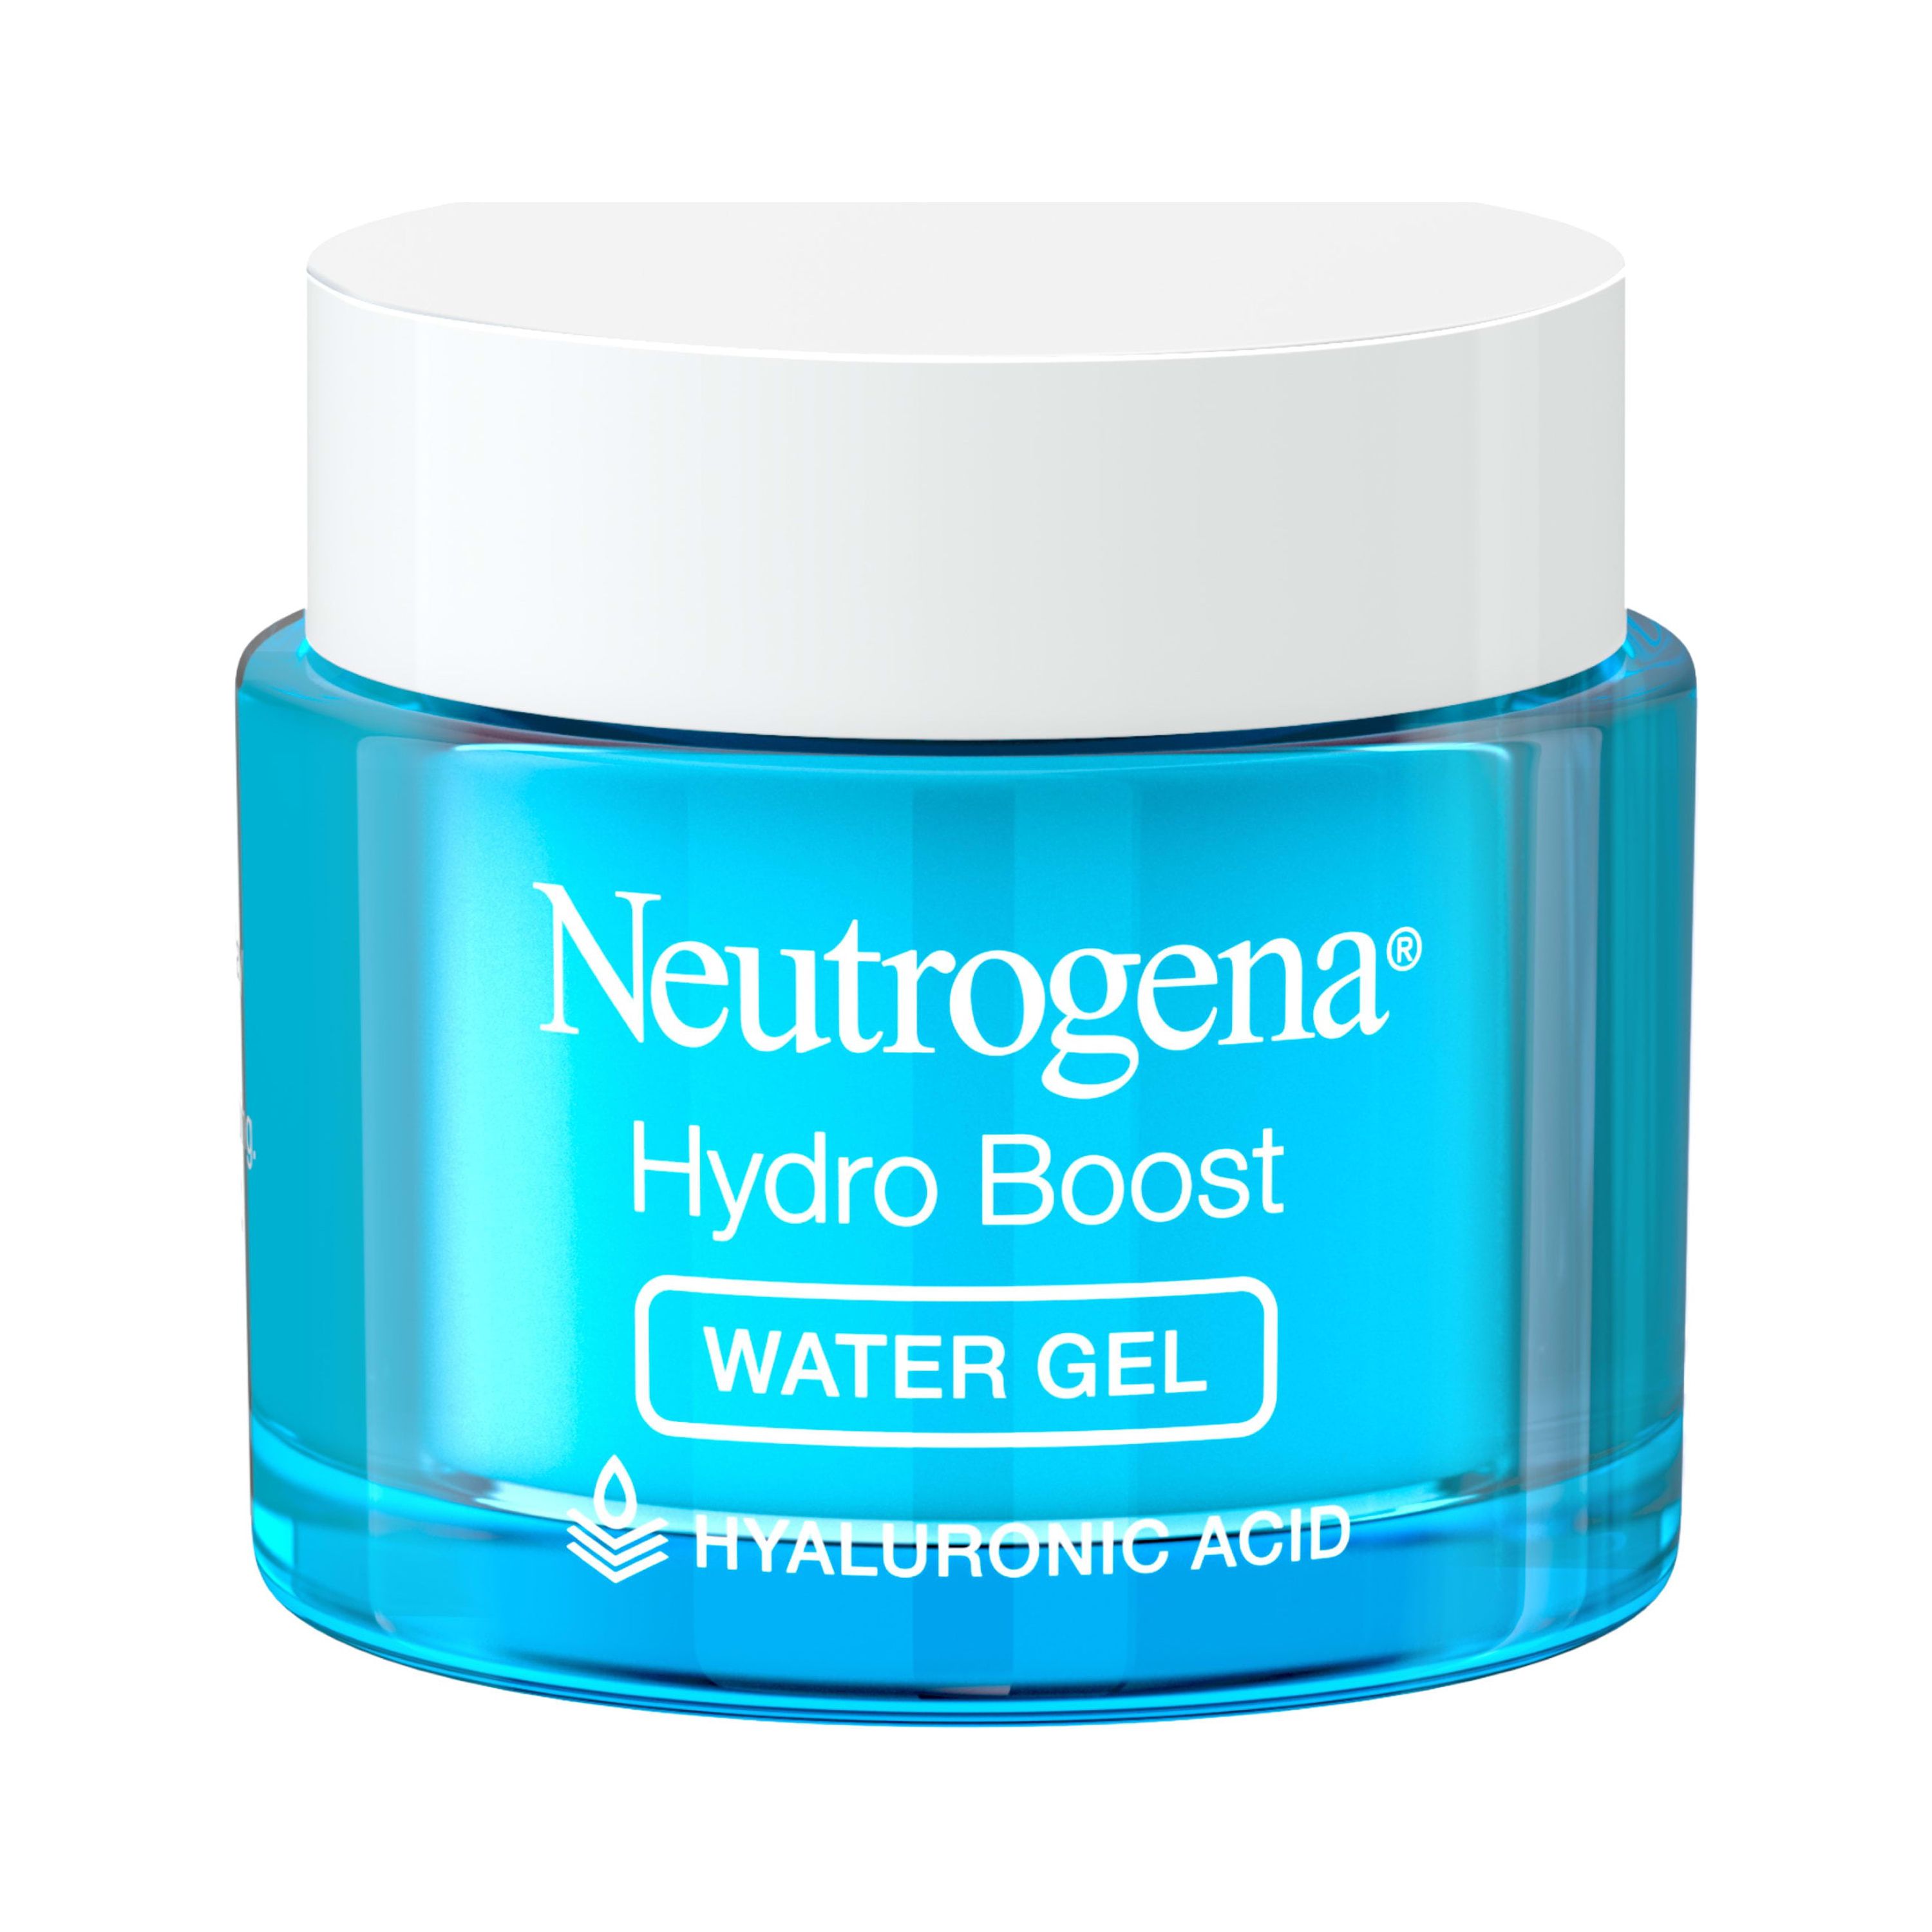 Neutrogena Hydro Boost Hyaluronic Acid Face Moisturizer for Dry Skin, 0.5 oz - image 1 of 10